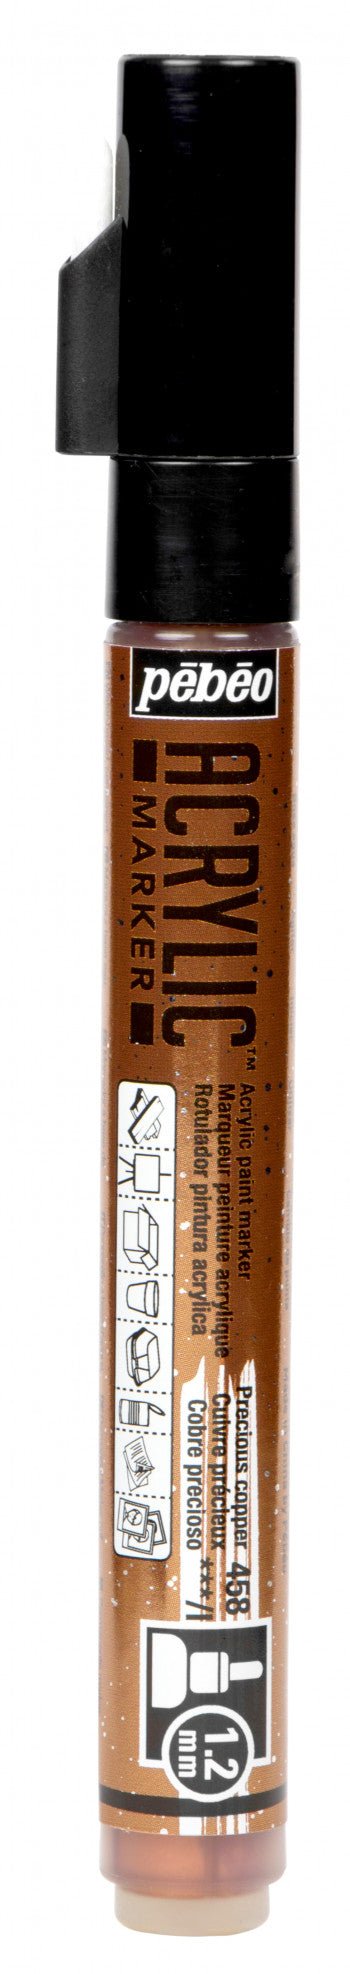 Acrylic Marker 1.2mm Pebeo Precious copper - 458